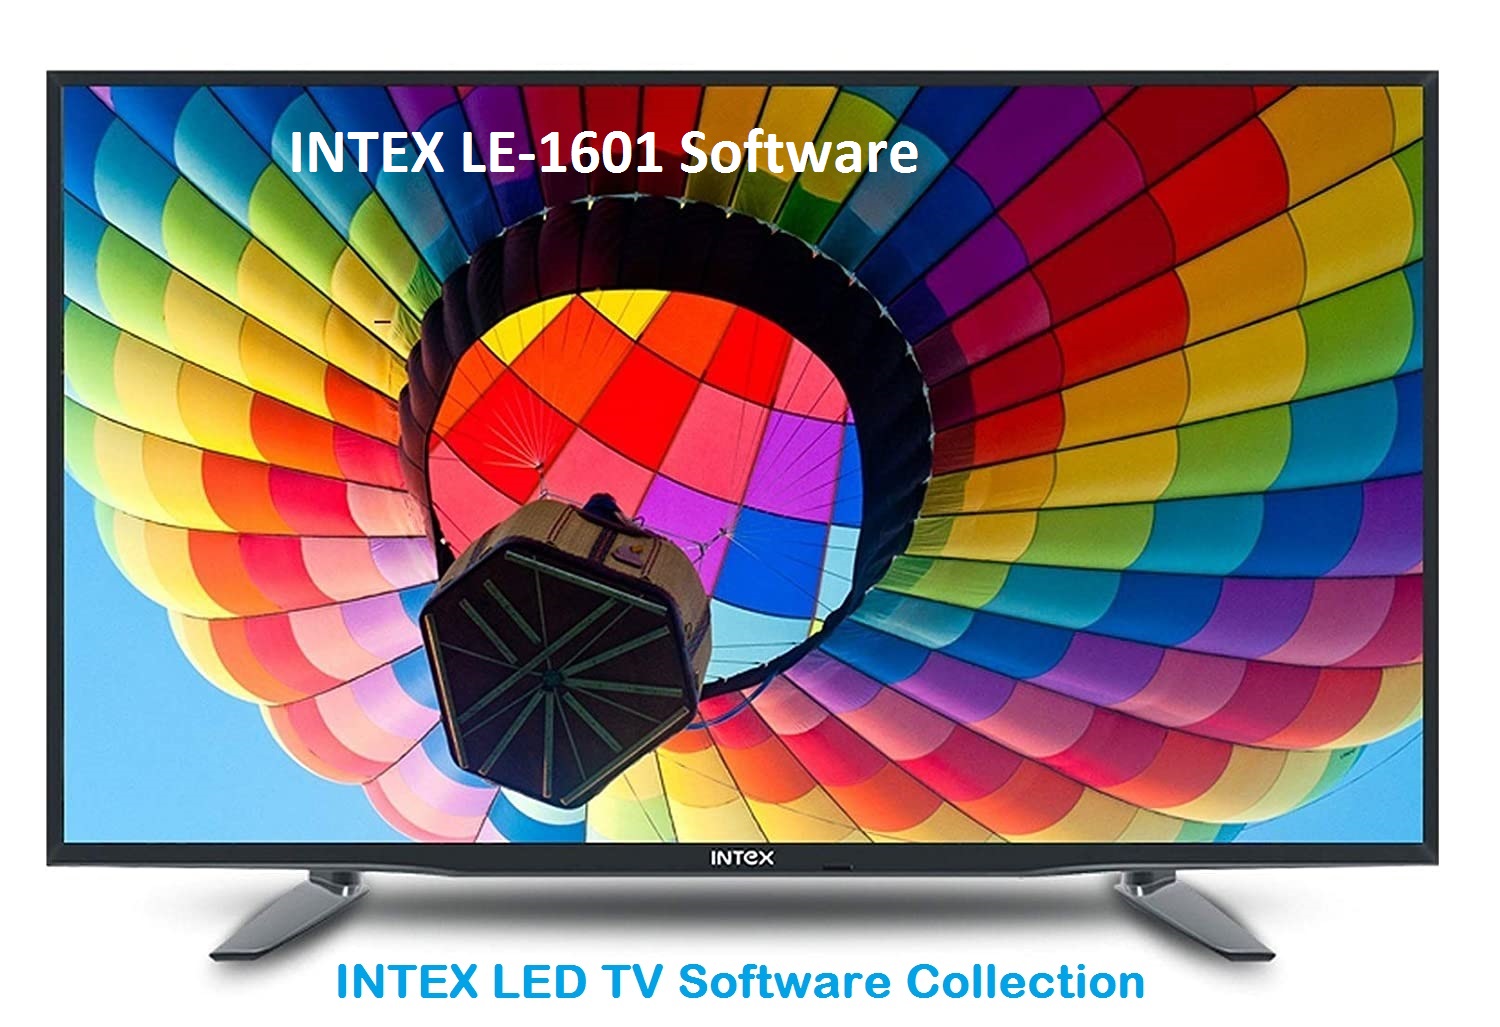 Intex Le-1601